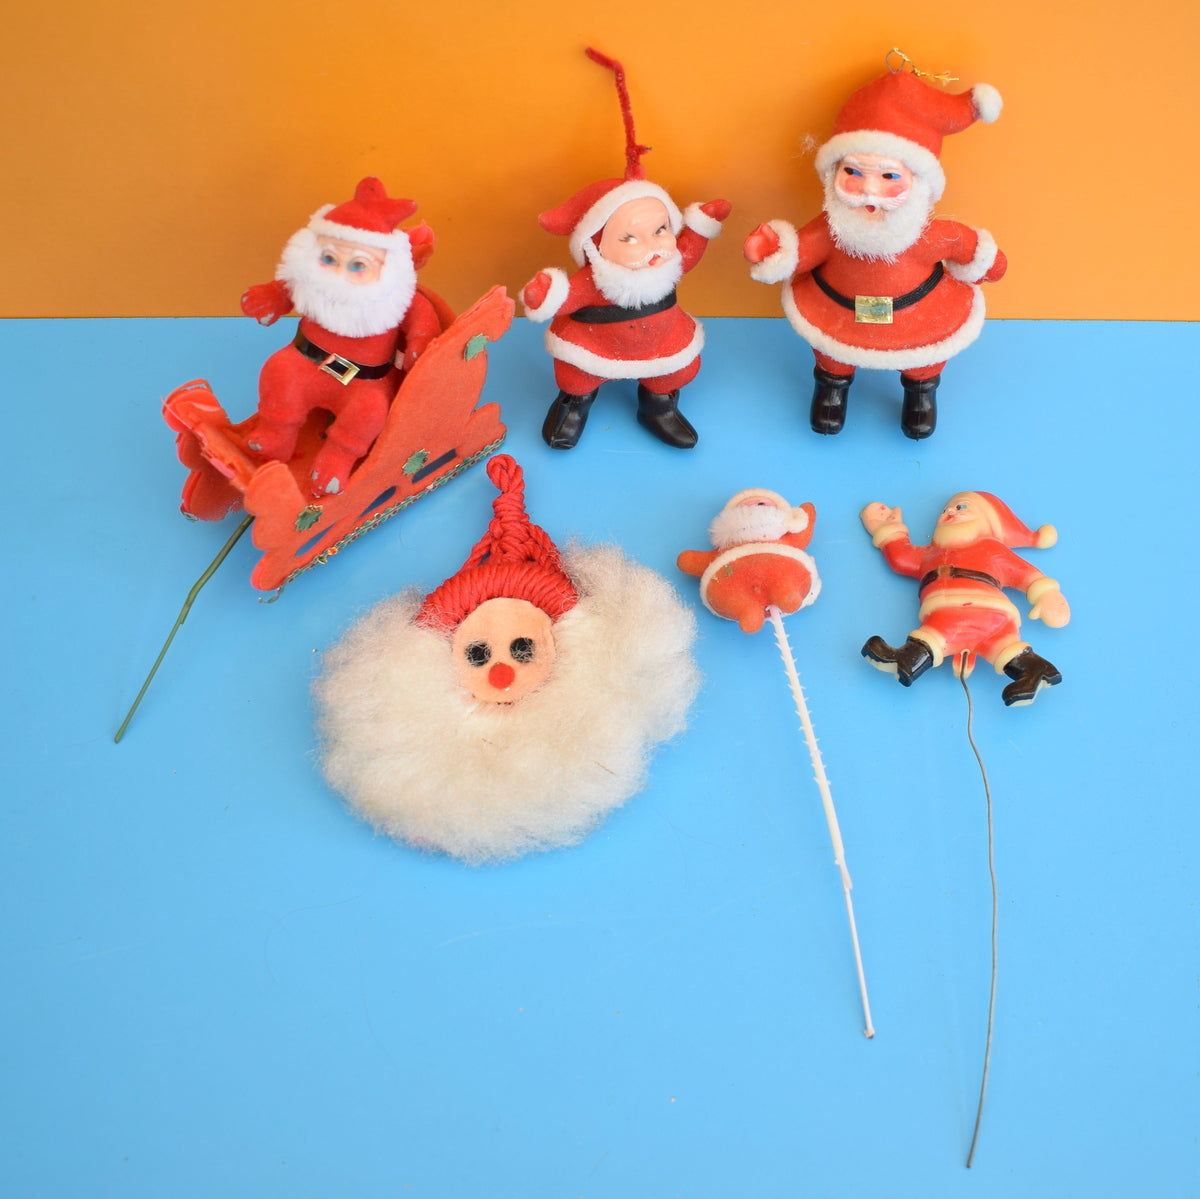 Vintage 1960s Kitsch Flocked Plastic Christmas Decorations x6 - Santa